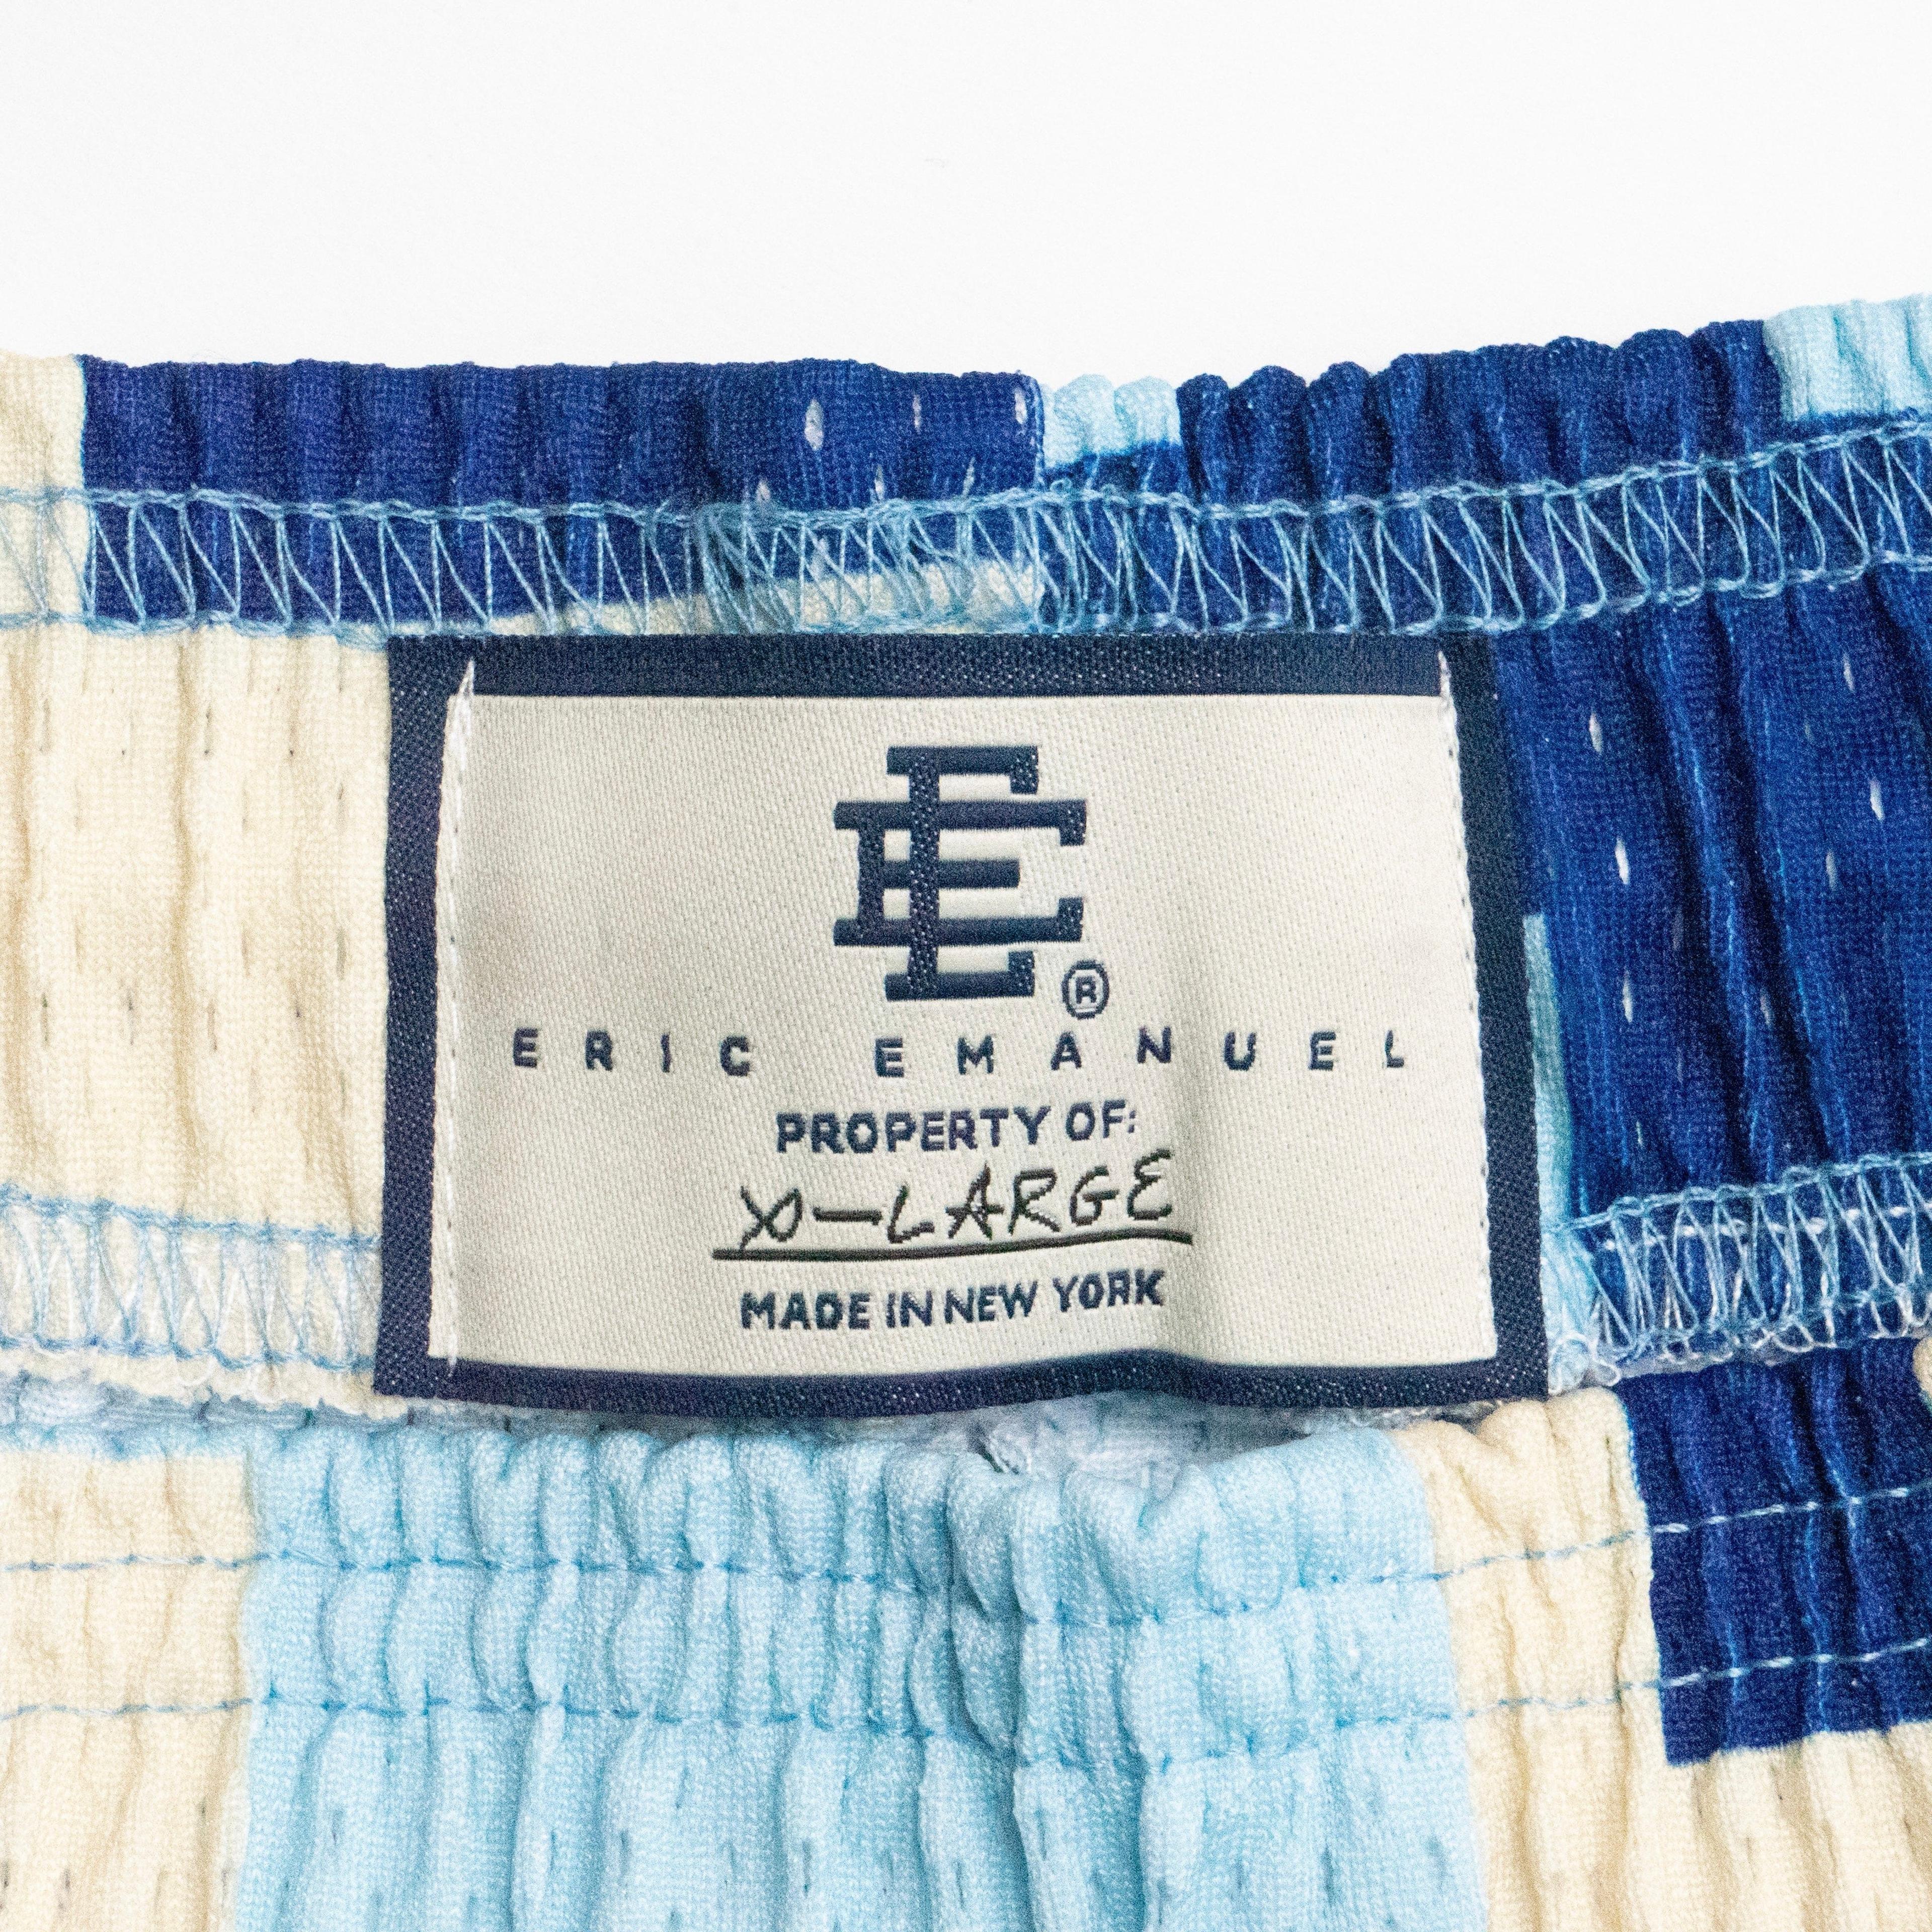 Alternate View 3 of Eric Emanuel EE Basic Shorts Digi Camo Blue Navy